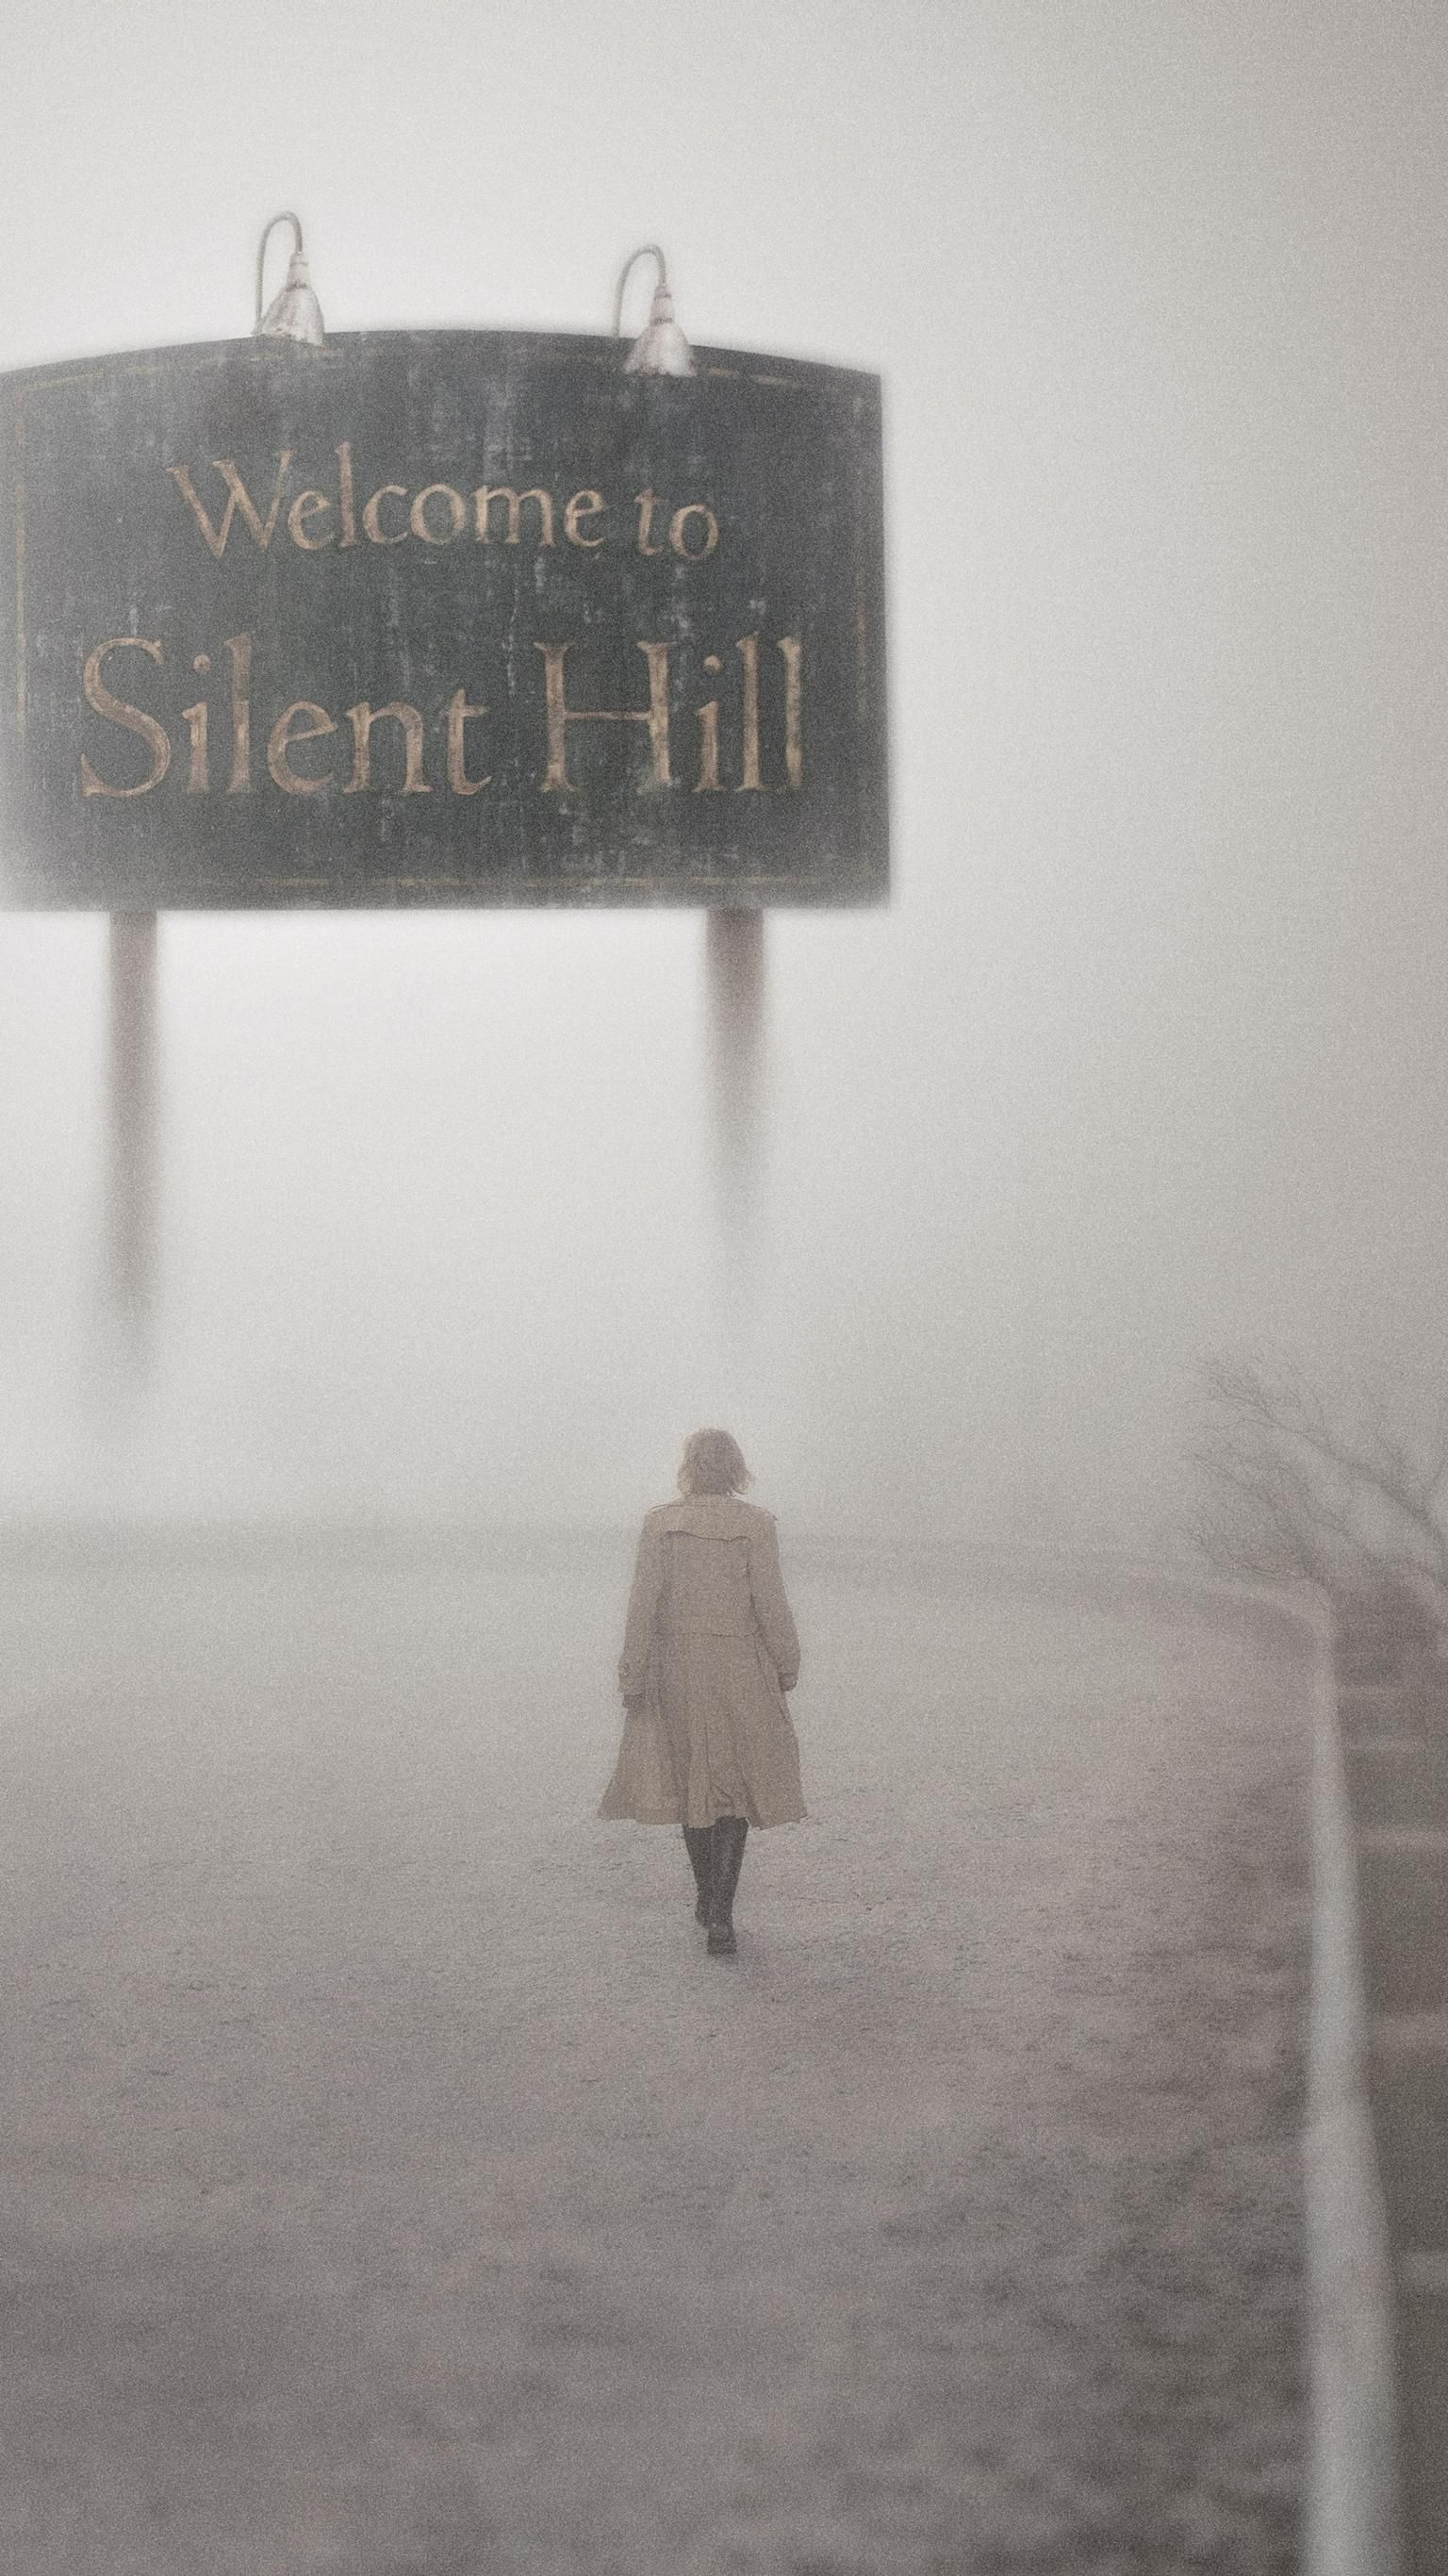 Silent Hill Phone Обои - верхний бесплатный фоновый фон телефона Silent Hill - WallpaperAccess